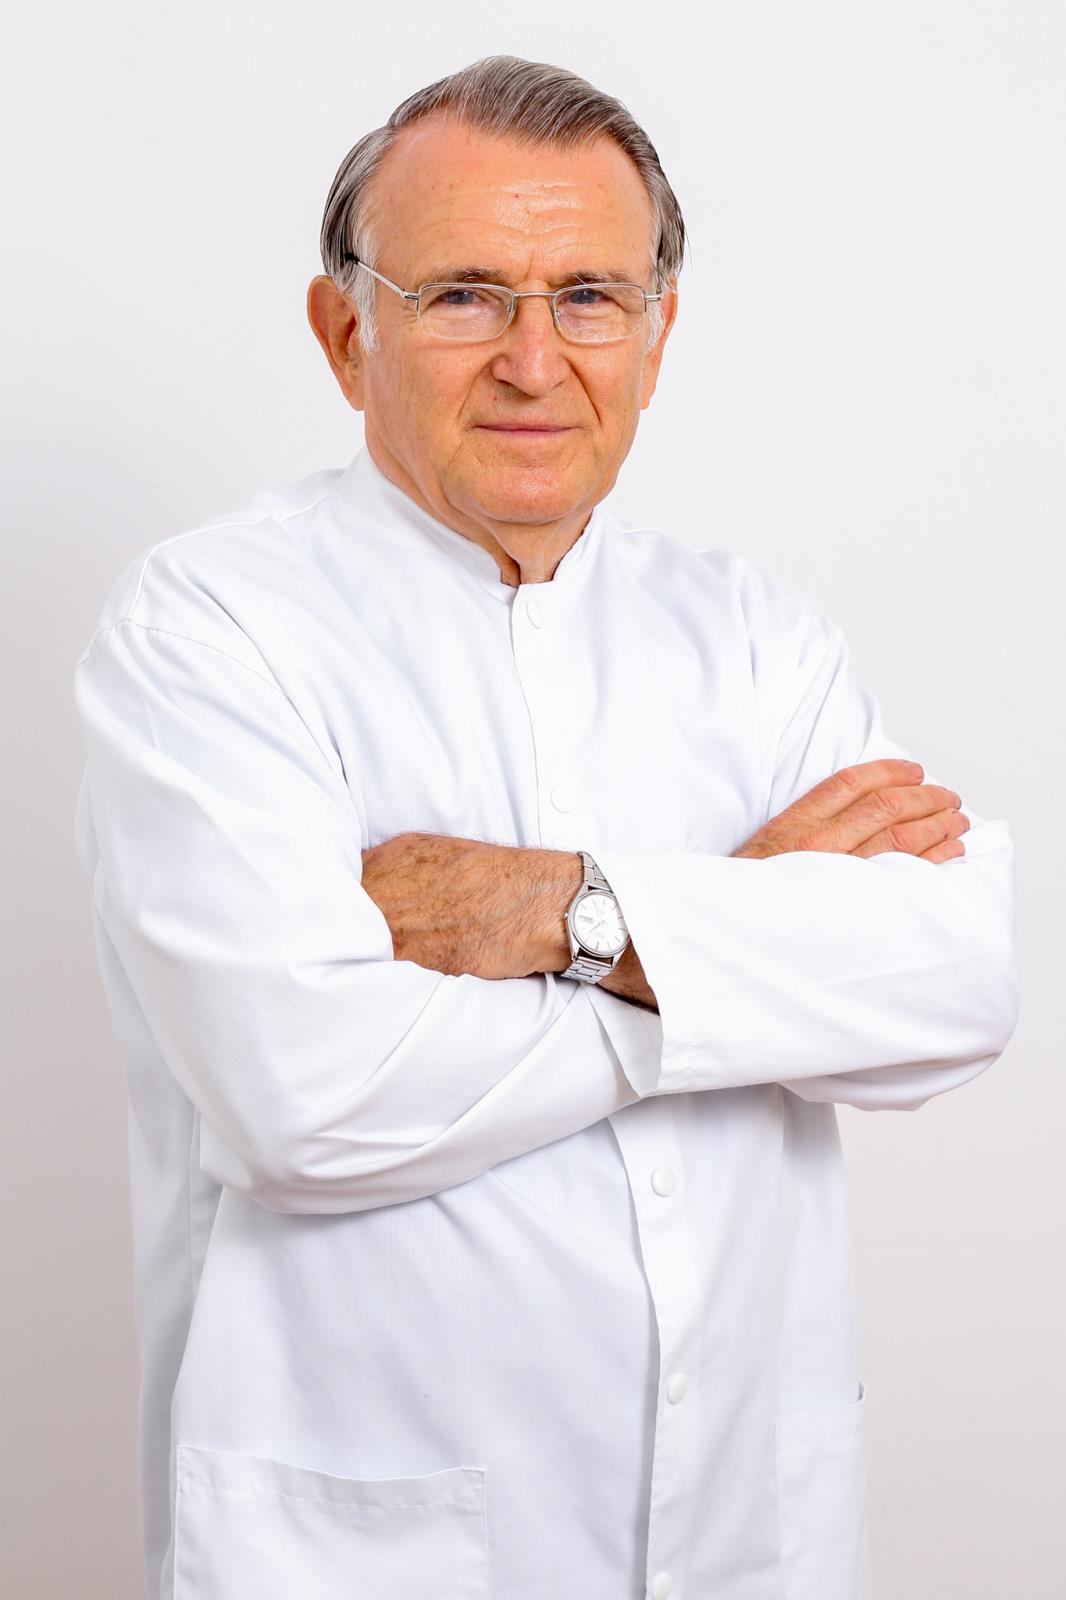 Dr. Virgiliu Stroescu